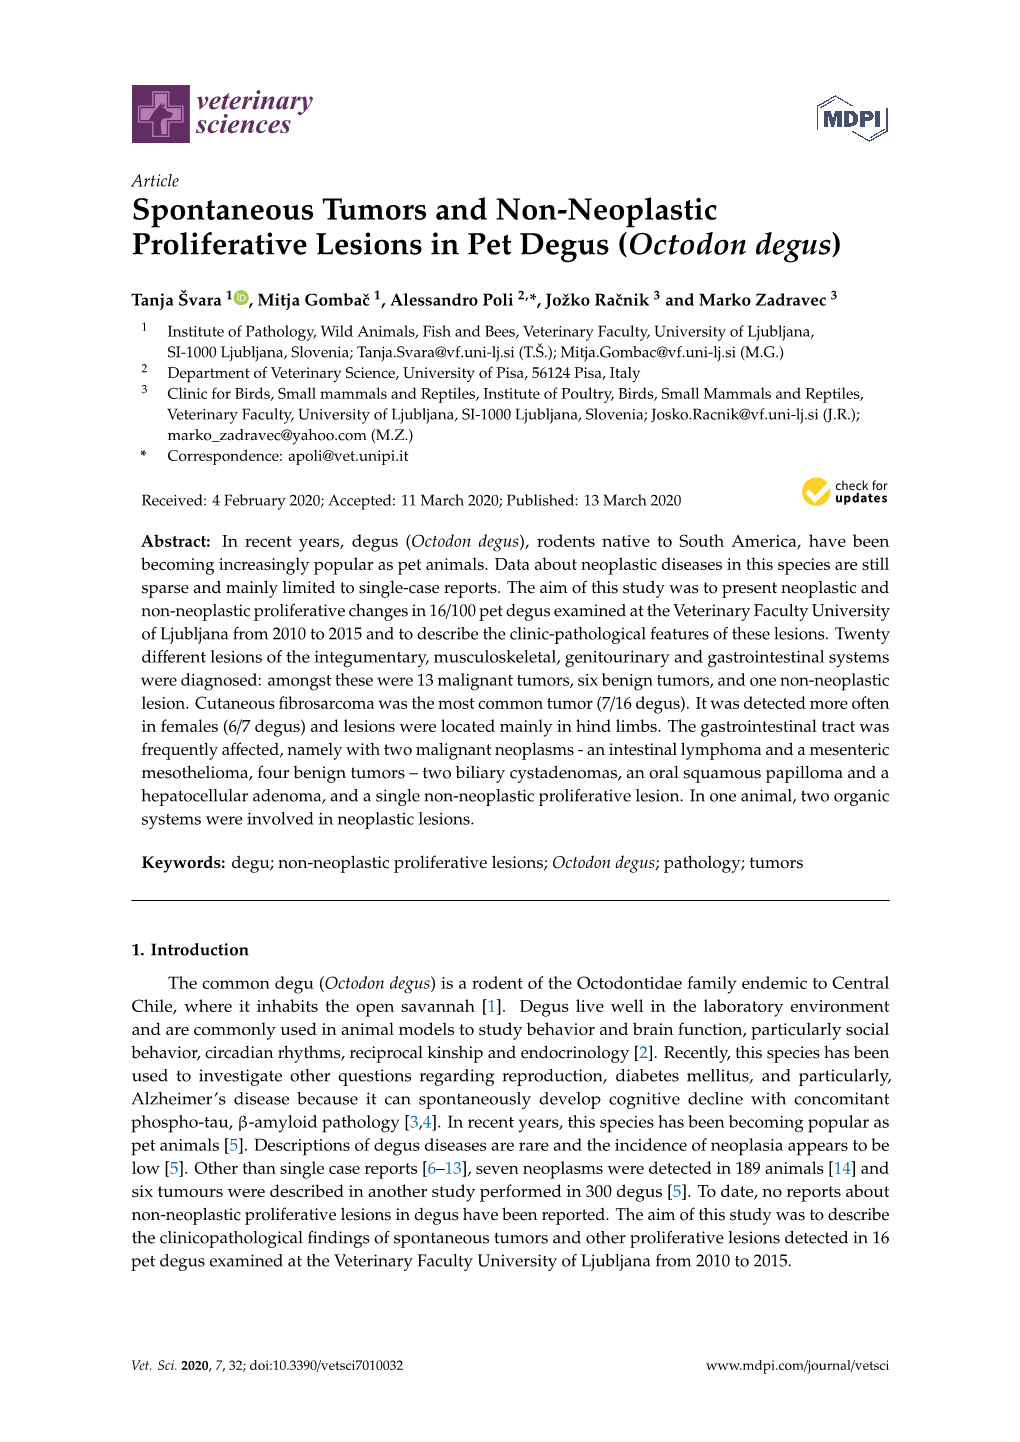 Spontaneous Tumors and Non-Neoplastic Proliferative Lesions in Pet Degus (Octodon Degus)